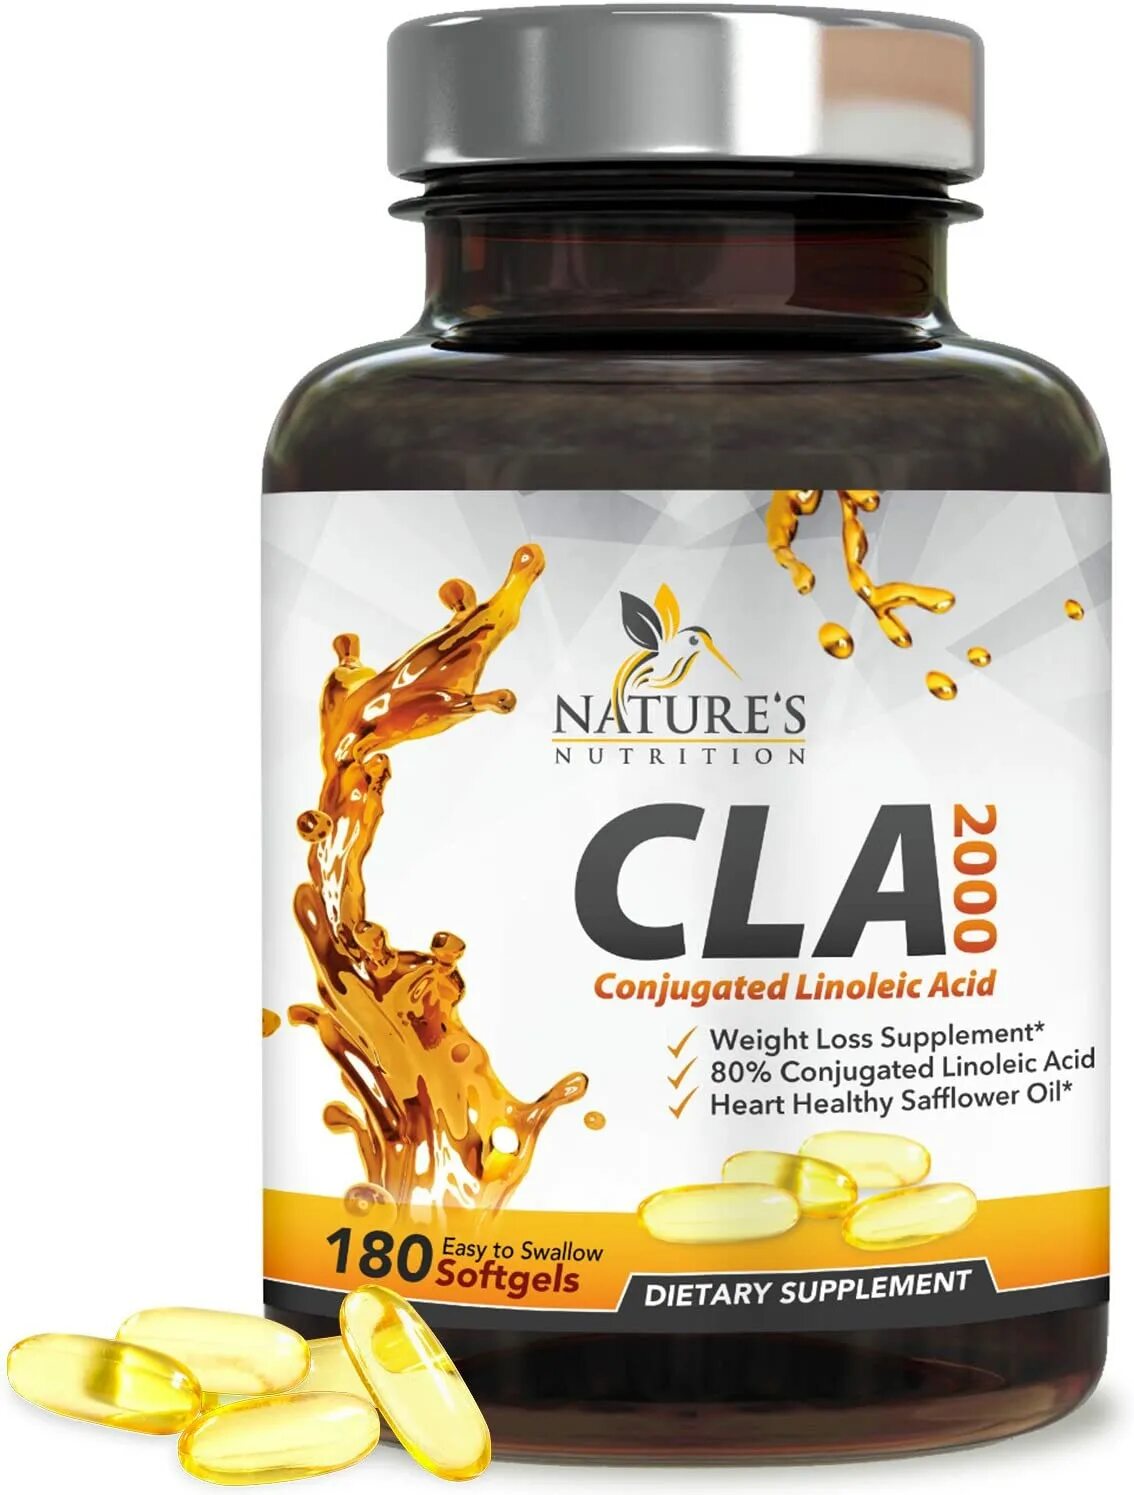 CLA витамины. Natural supp CLA. Спортивное питание natural supp. Max CLA 2400 MG инструкция.